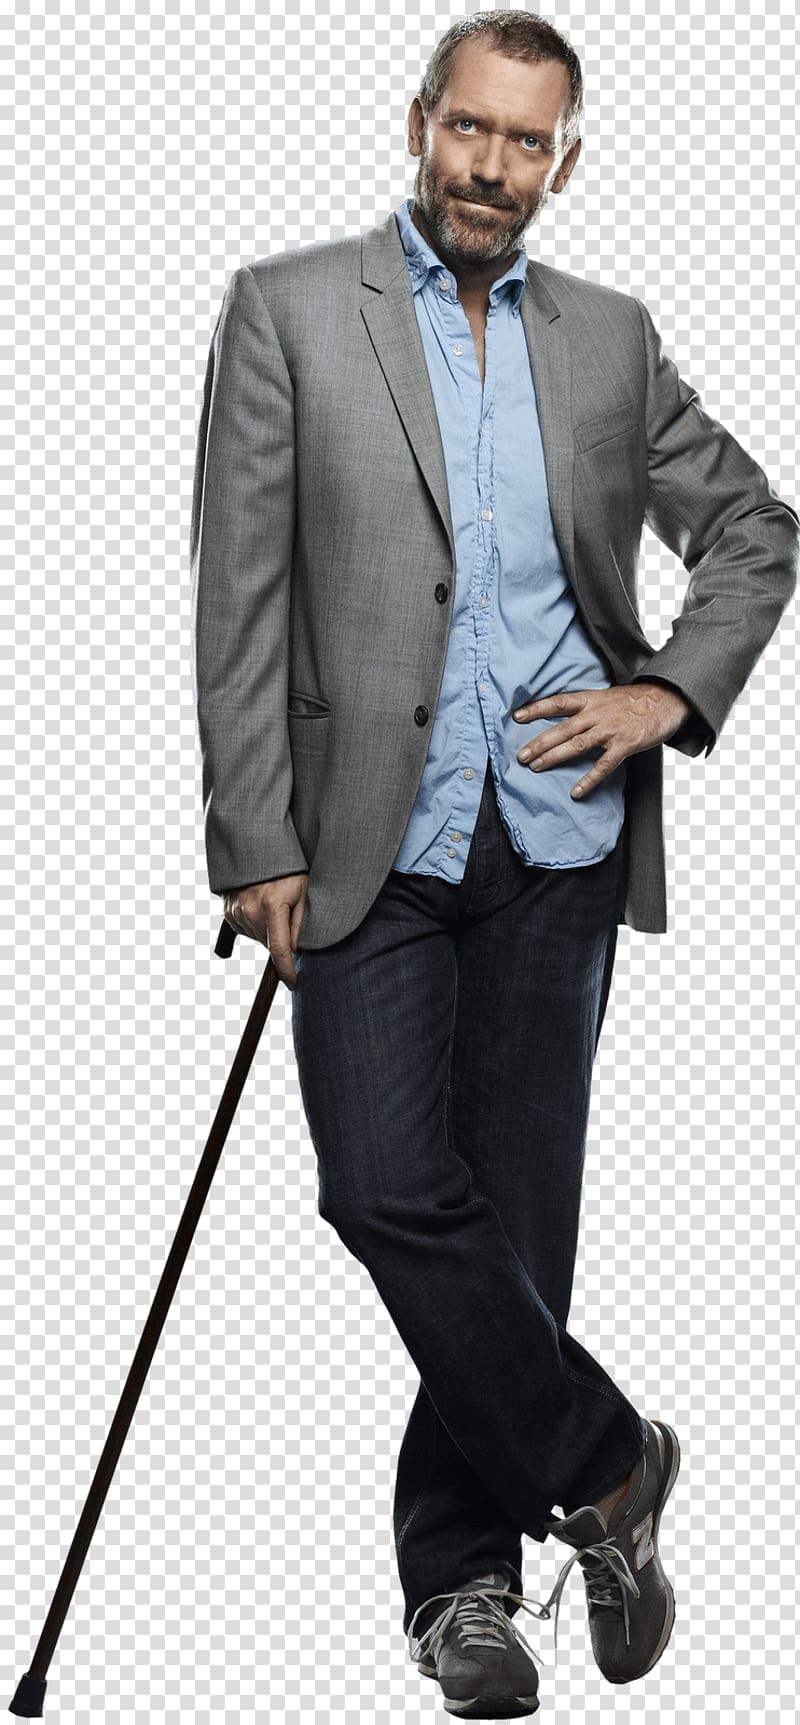 man in grey suit jacket, Dr House Walking Stick transparent background PNG clipart